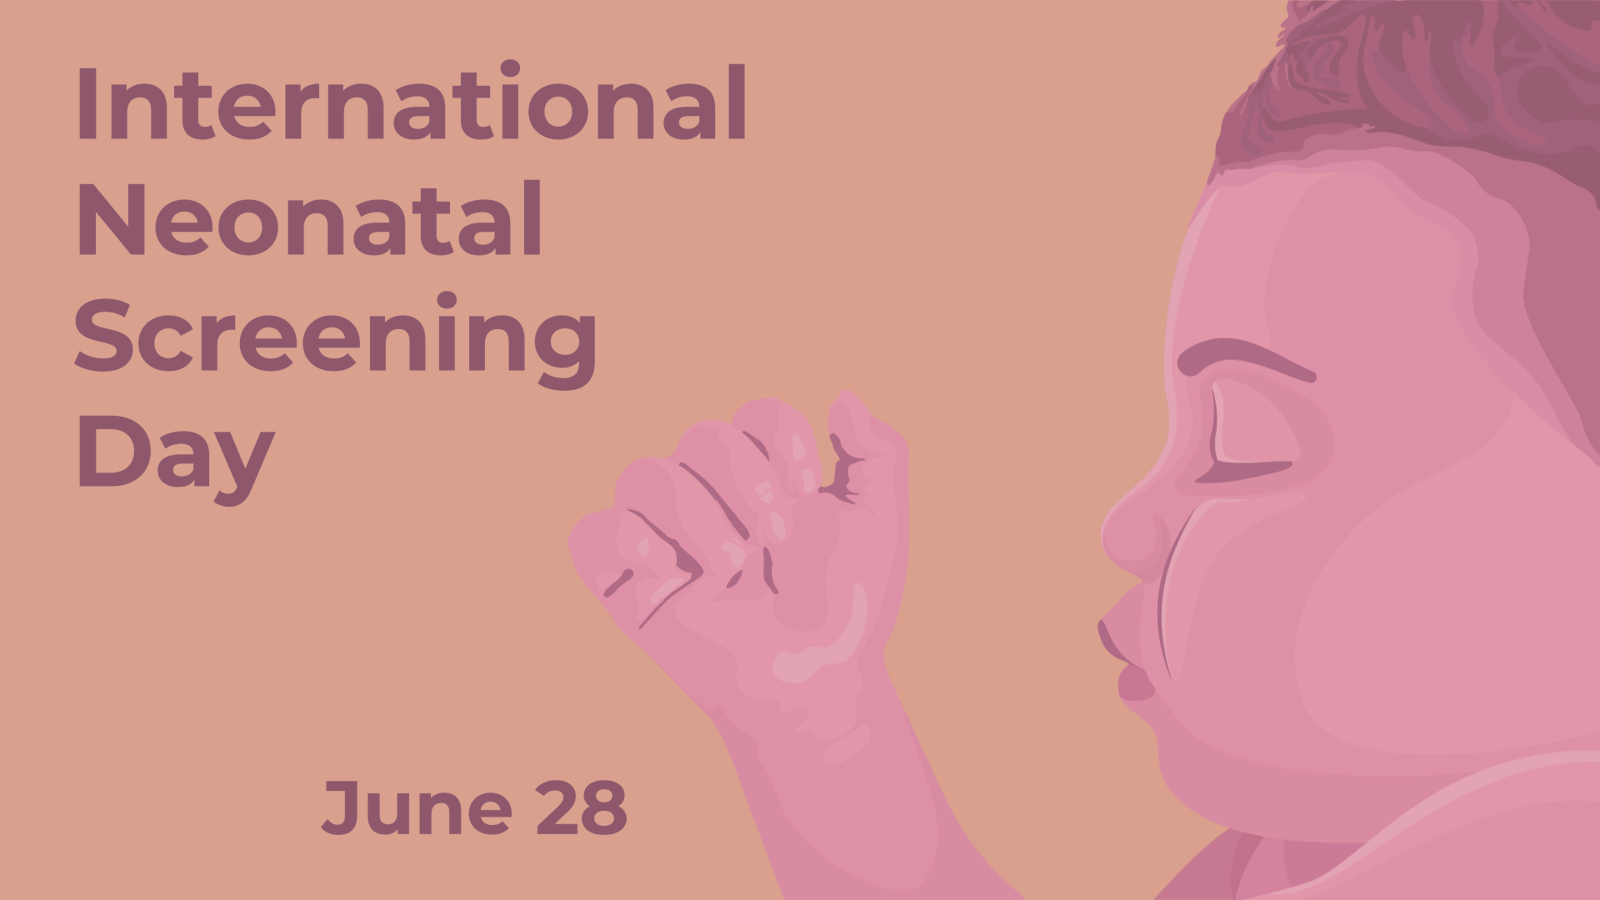 International Neonatal Screening Day June 28. Illustration of a sleeping baby in profile